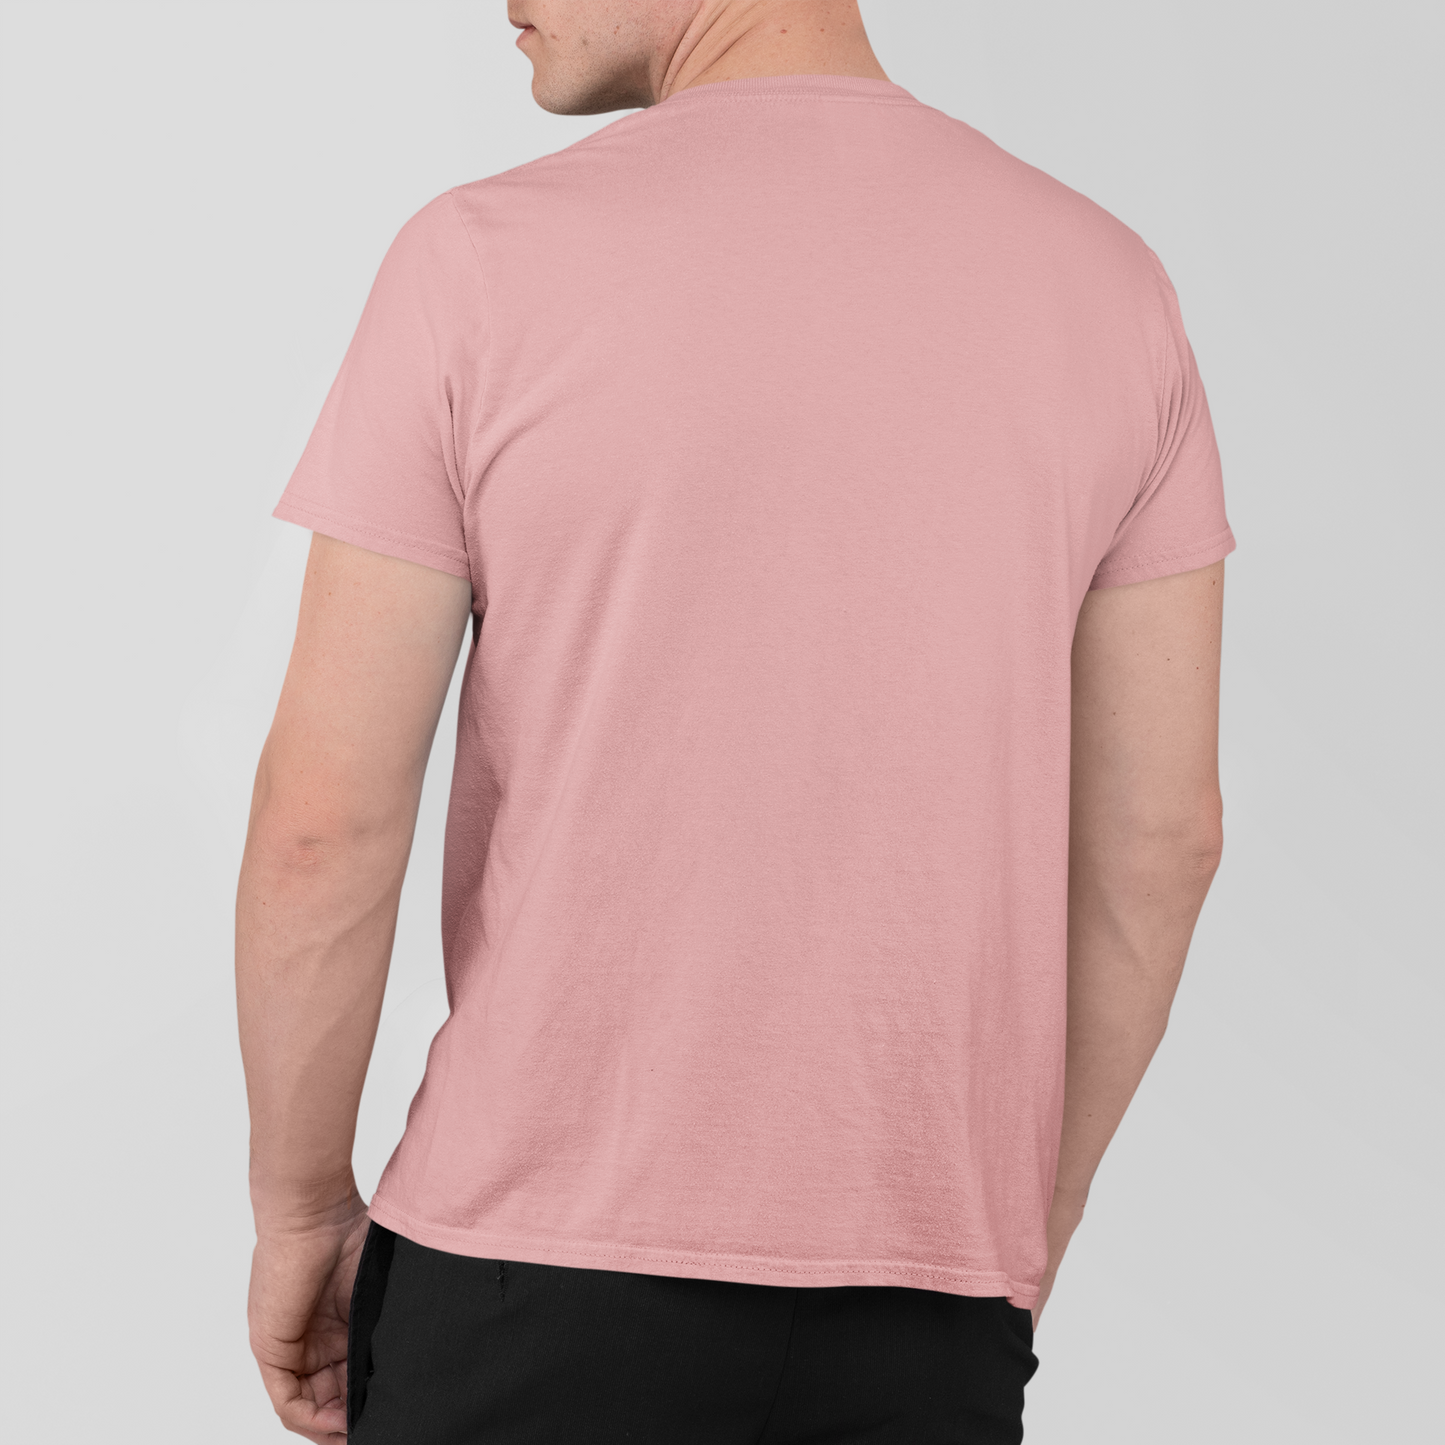 Chal Rasta Naap Printed Round Neck Cotton Tshirt - Pink